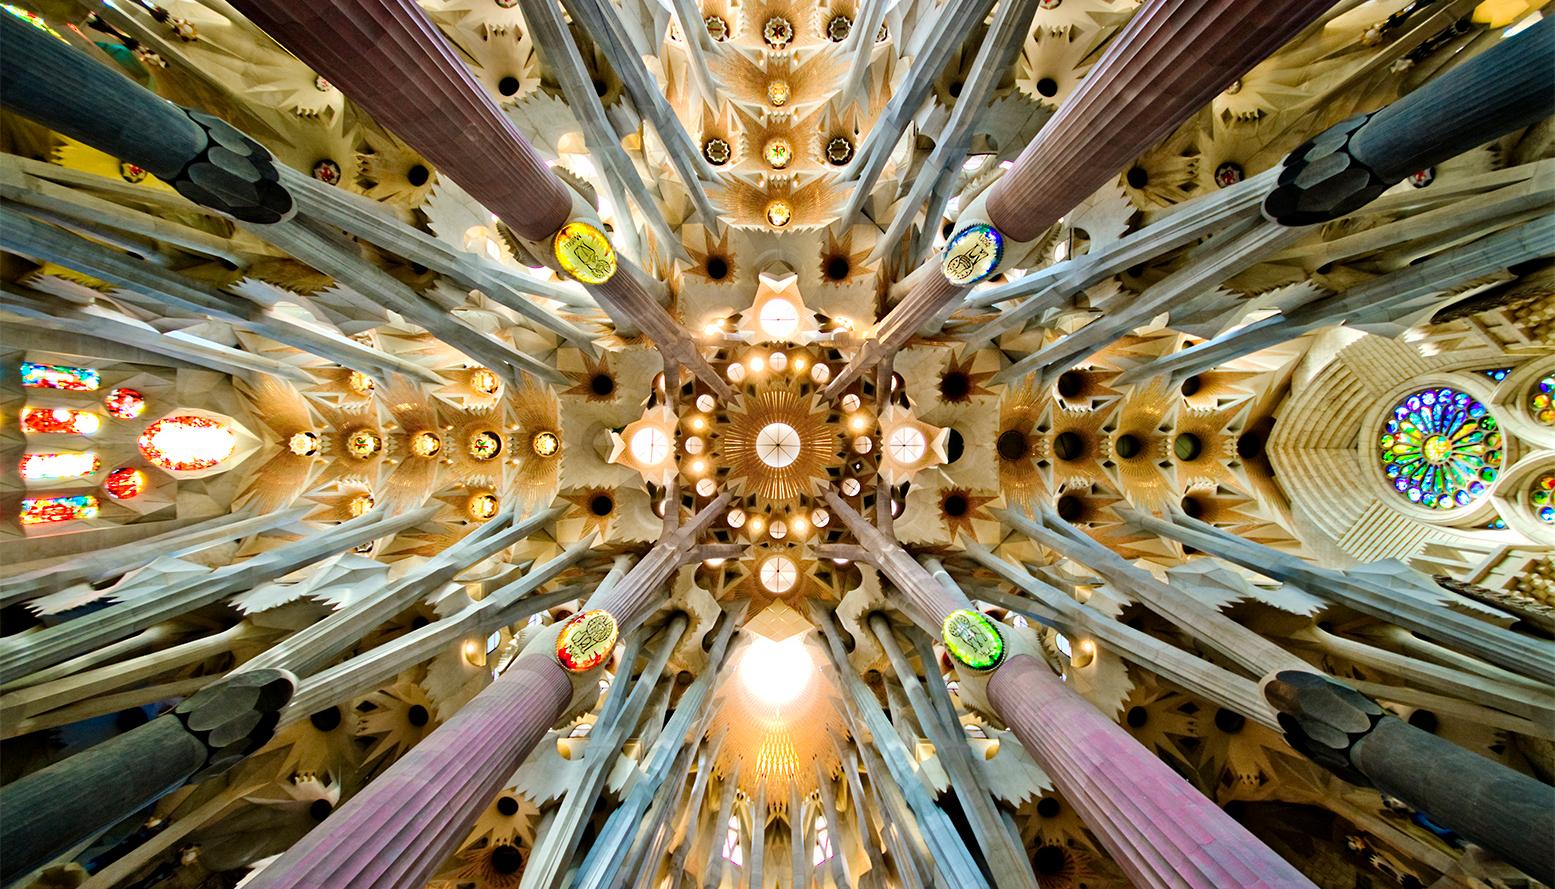 Cover image of this place Sagrada Familia